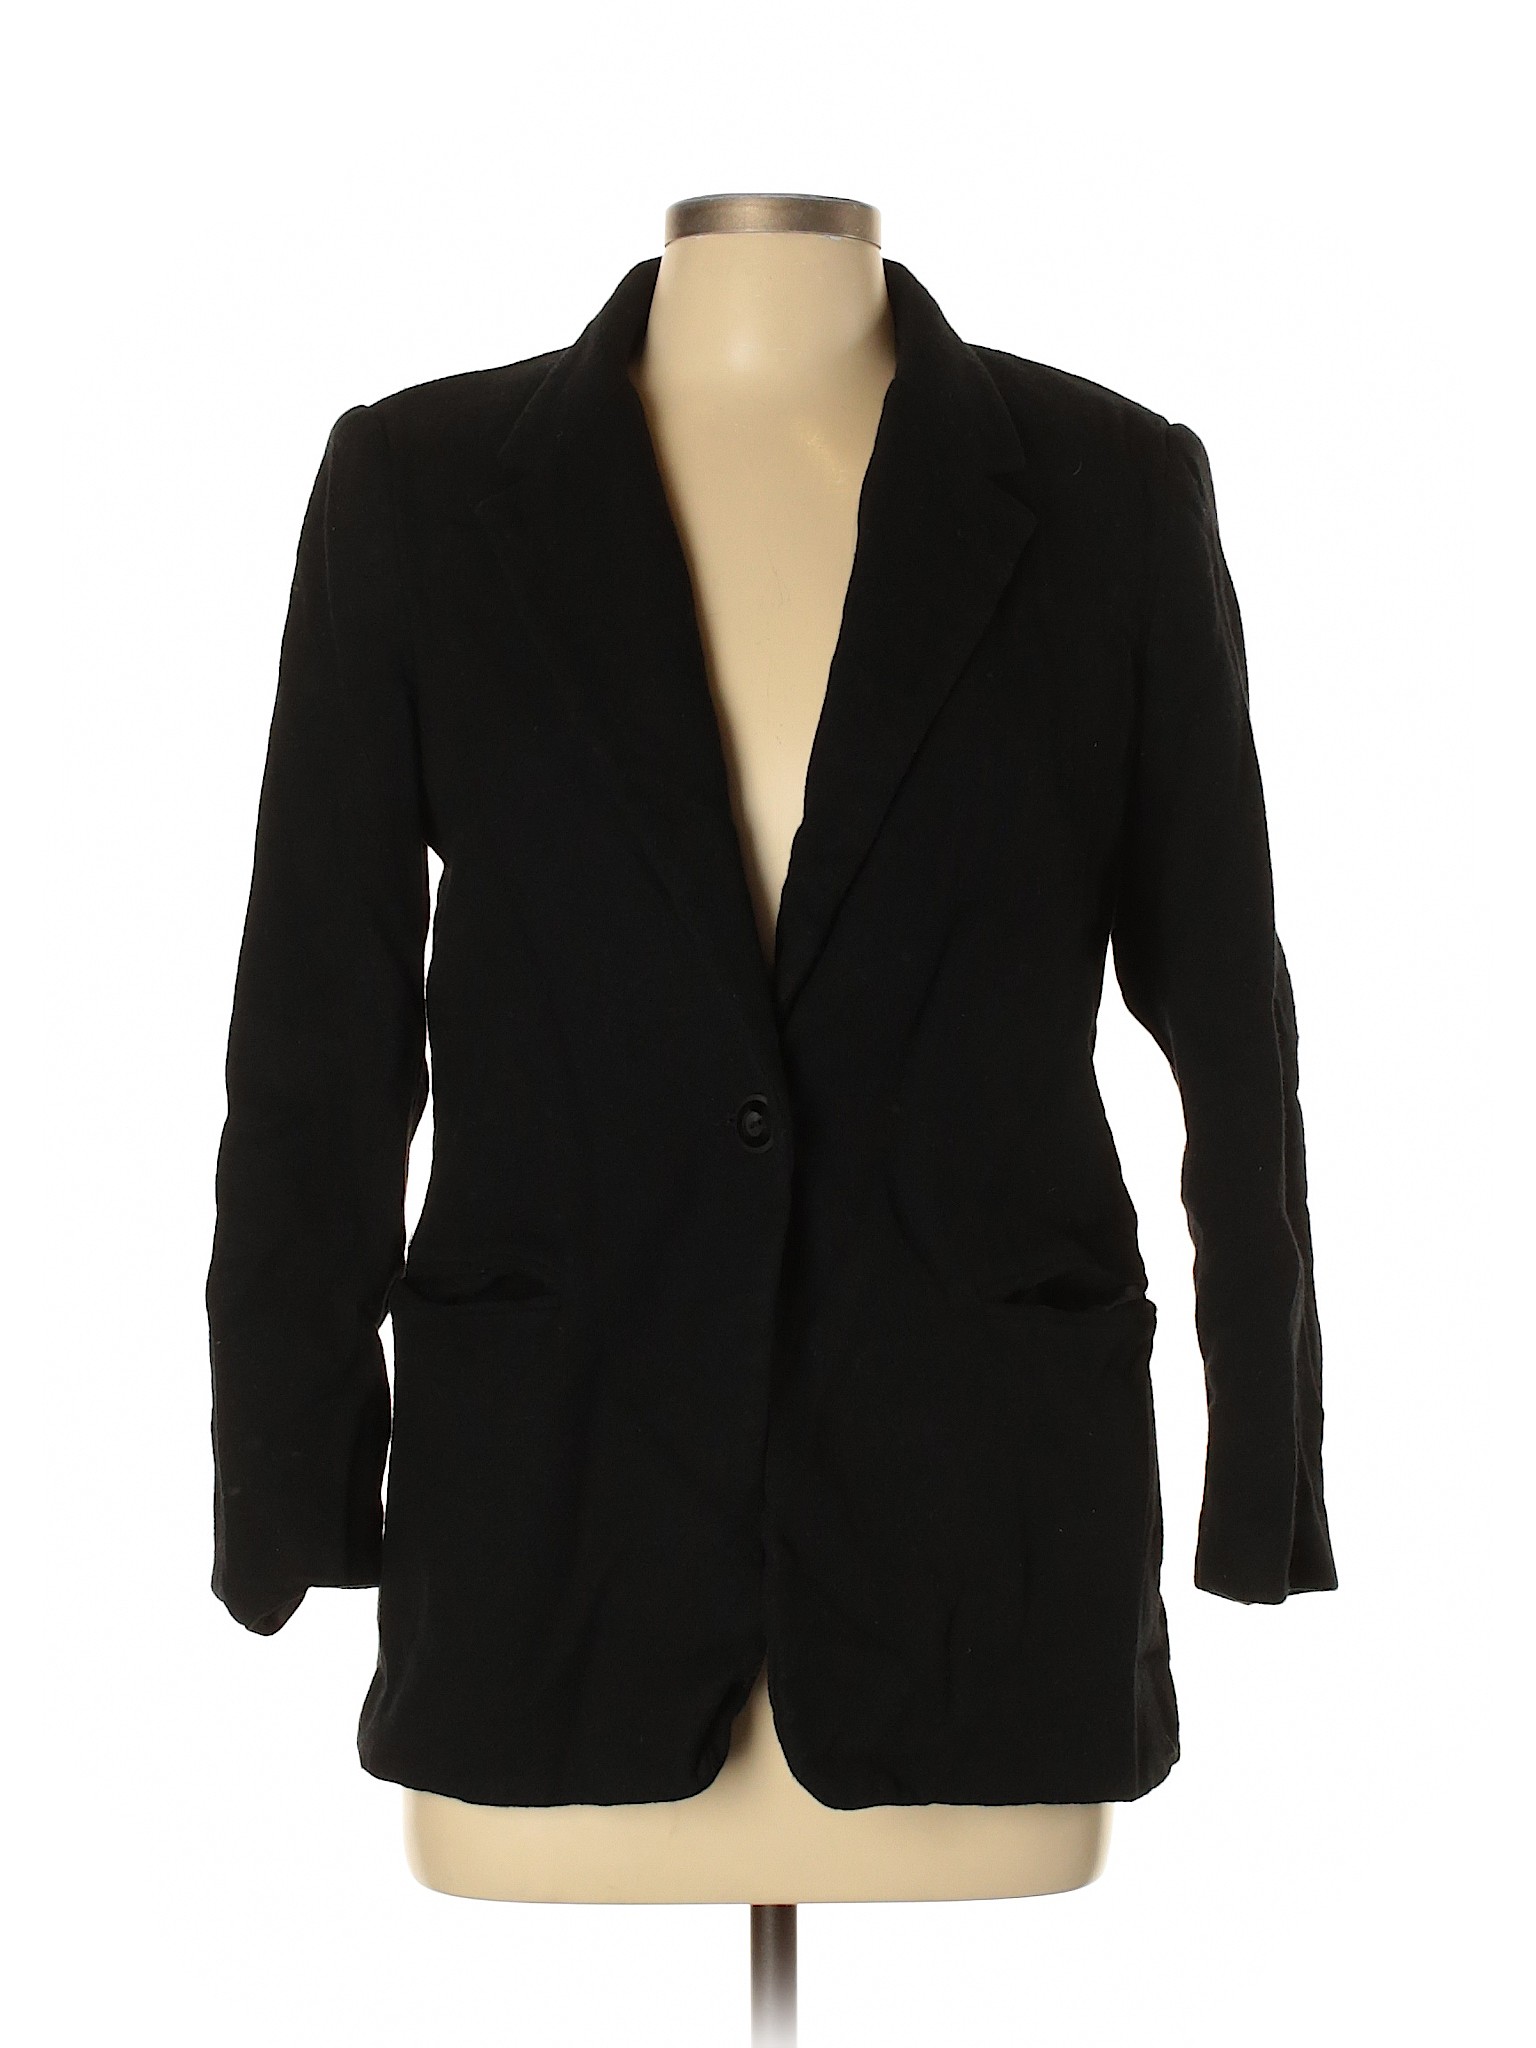 Sag Harbor Women Black Wool Blazer 12 | eBay